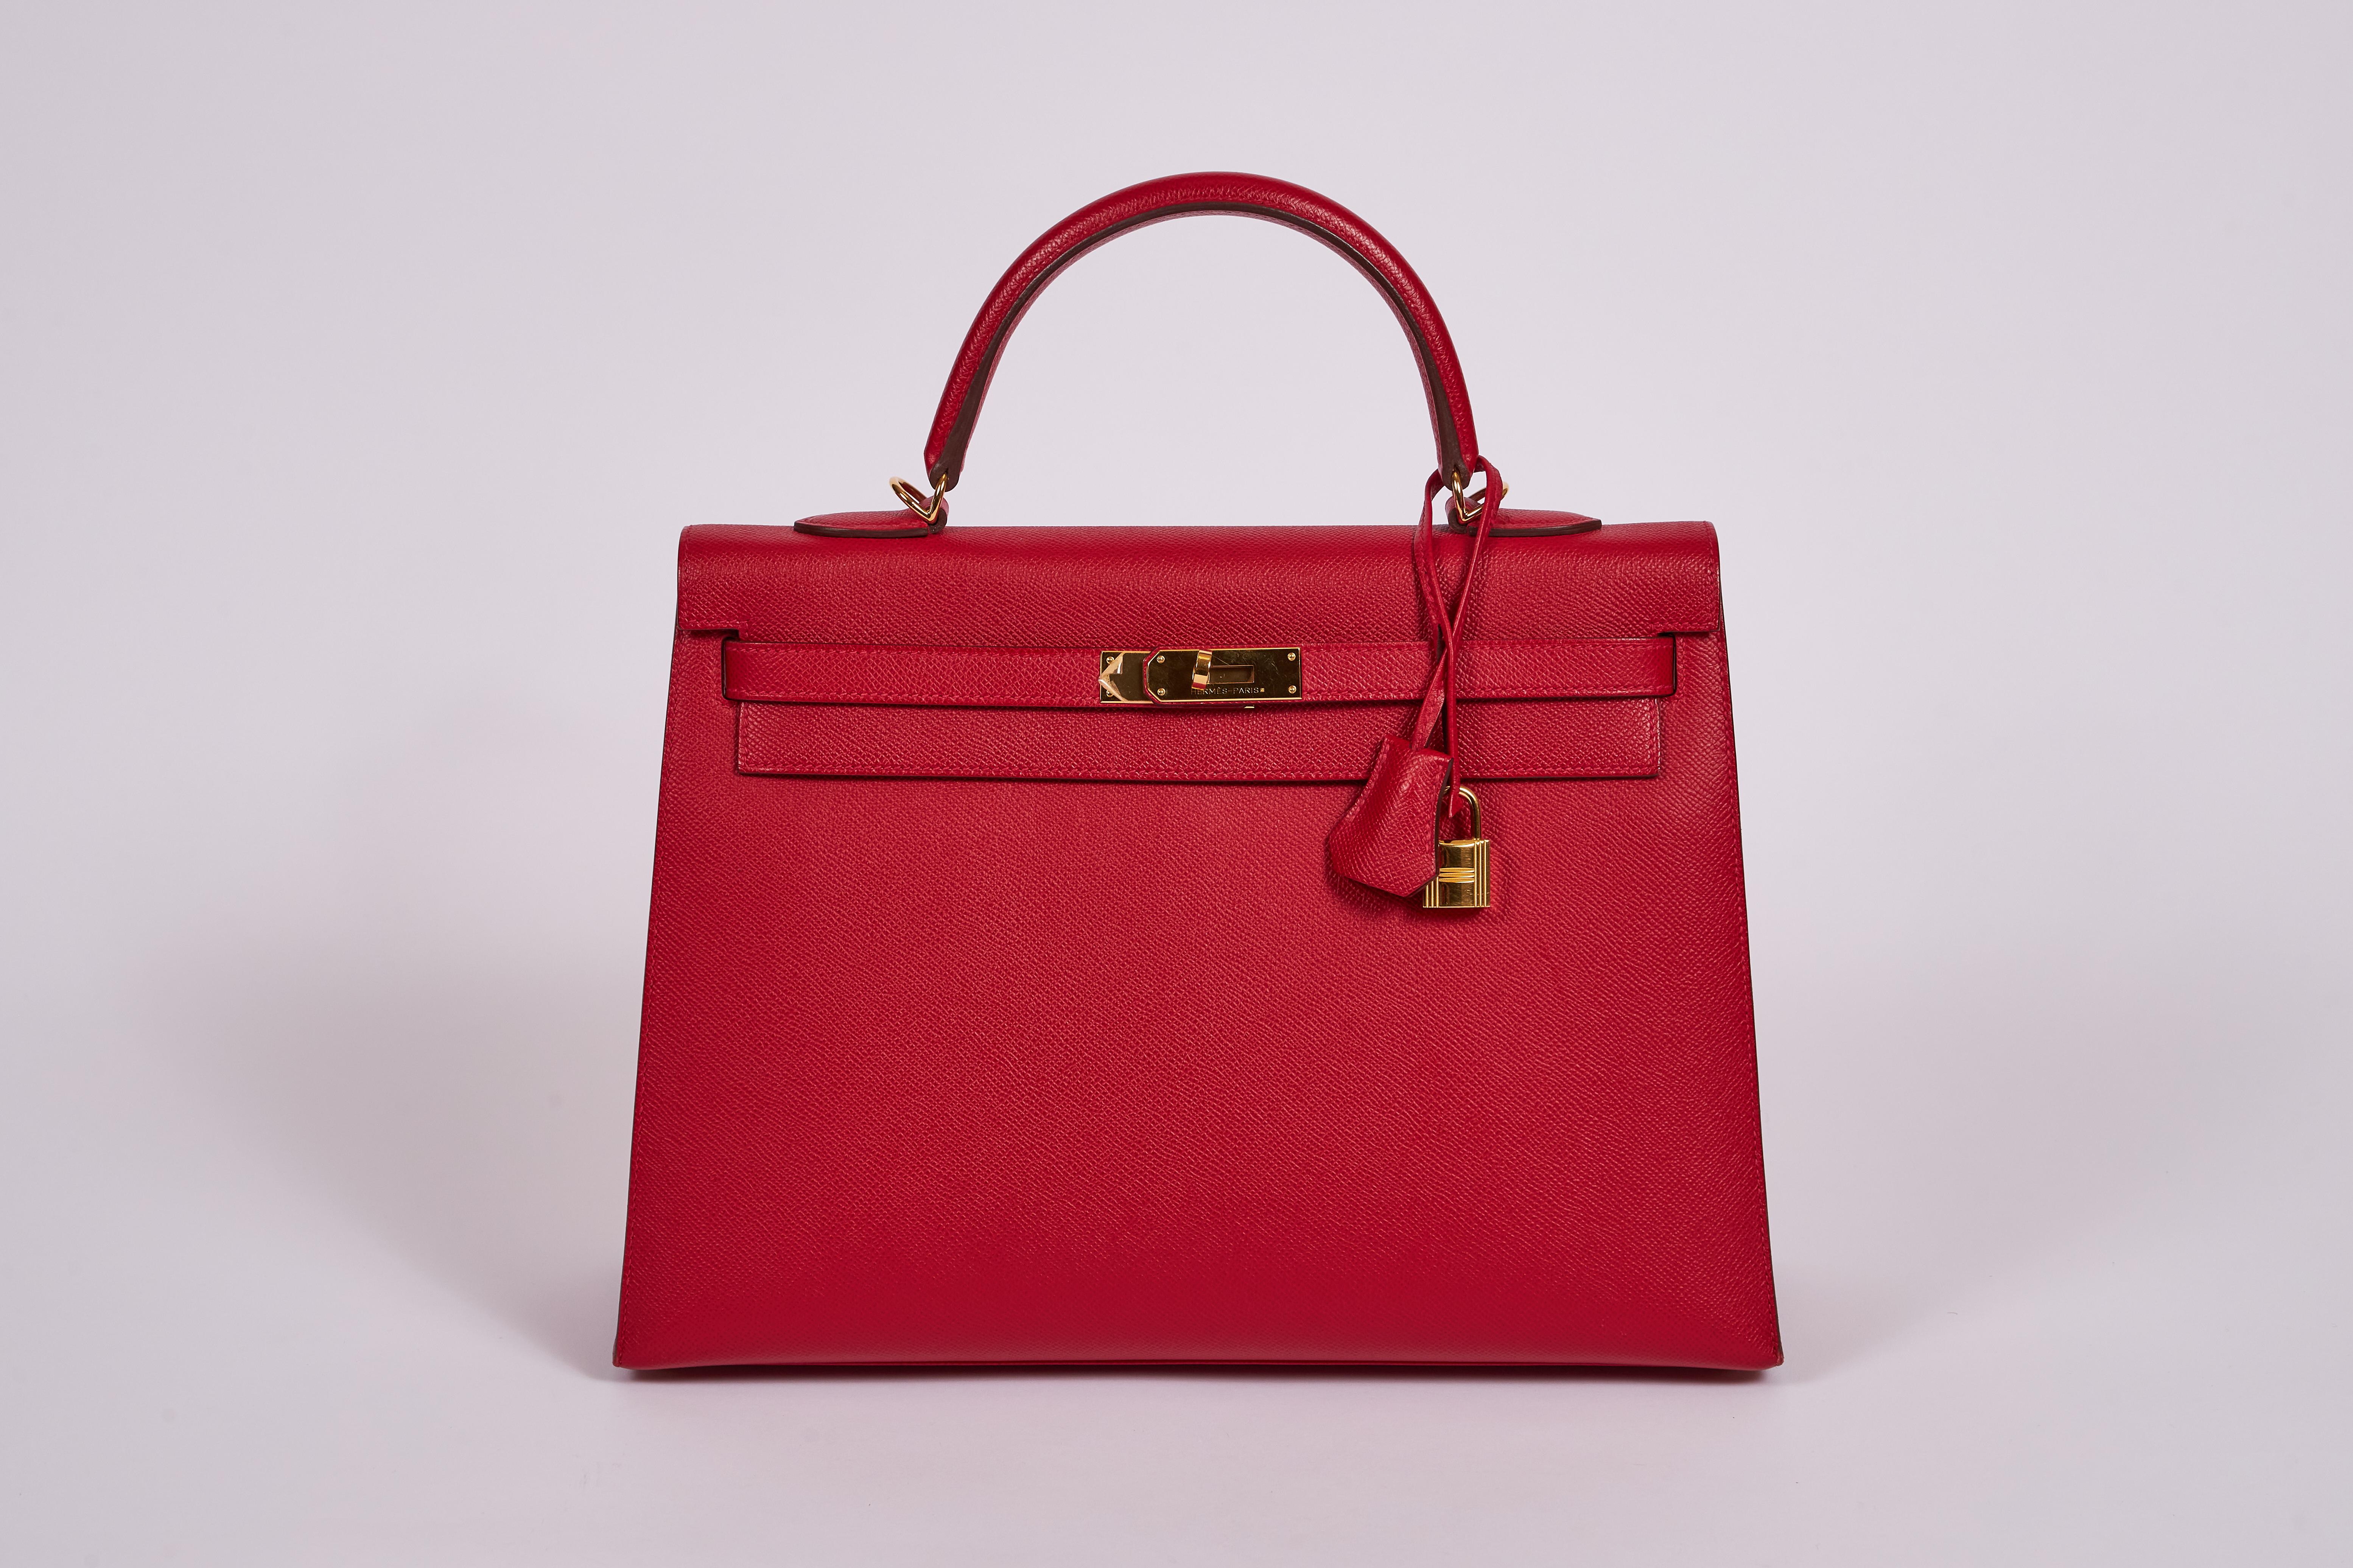 Hermes kelly bag 35 cm seller in rouge casaque epsom leather and gold tone hardware. Detachable strap, 35